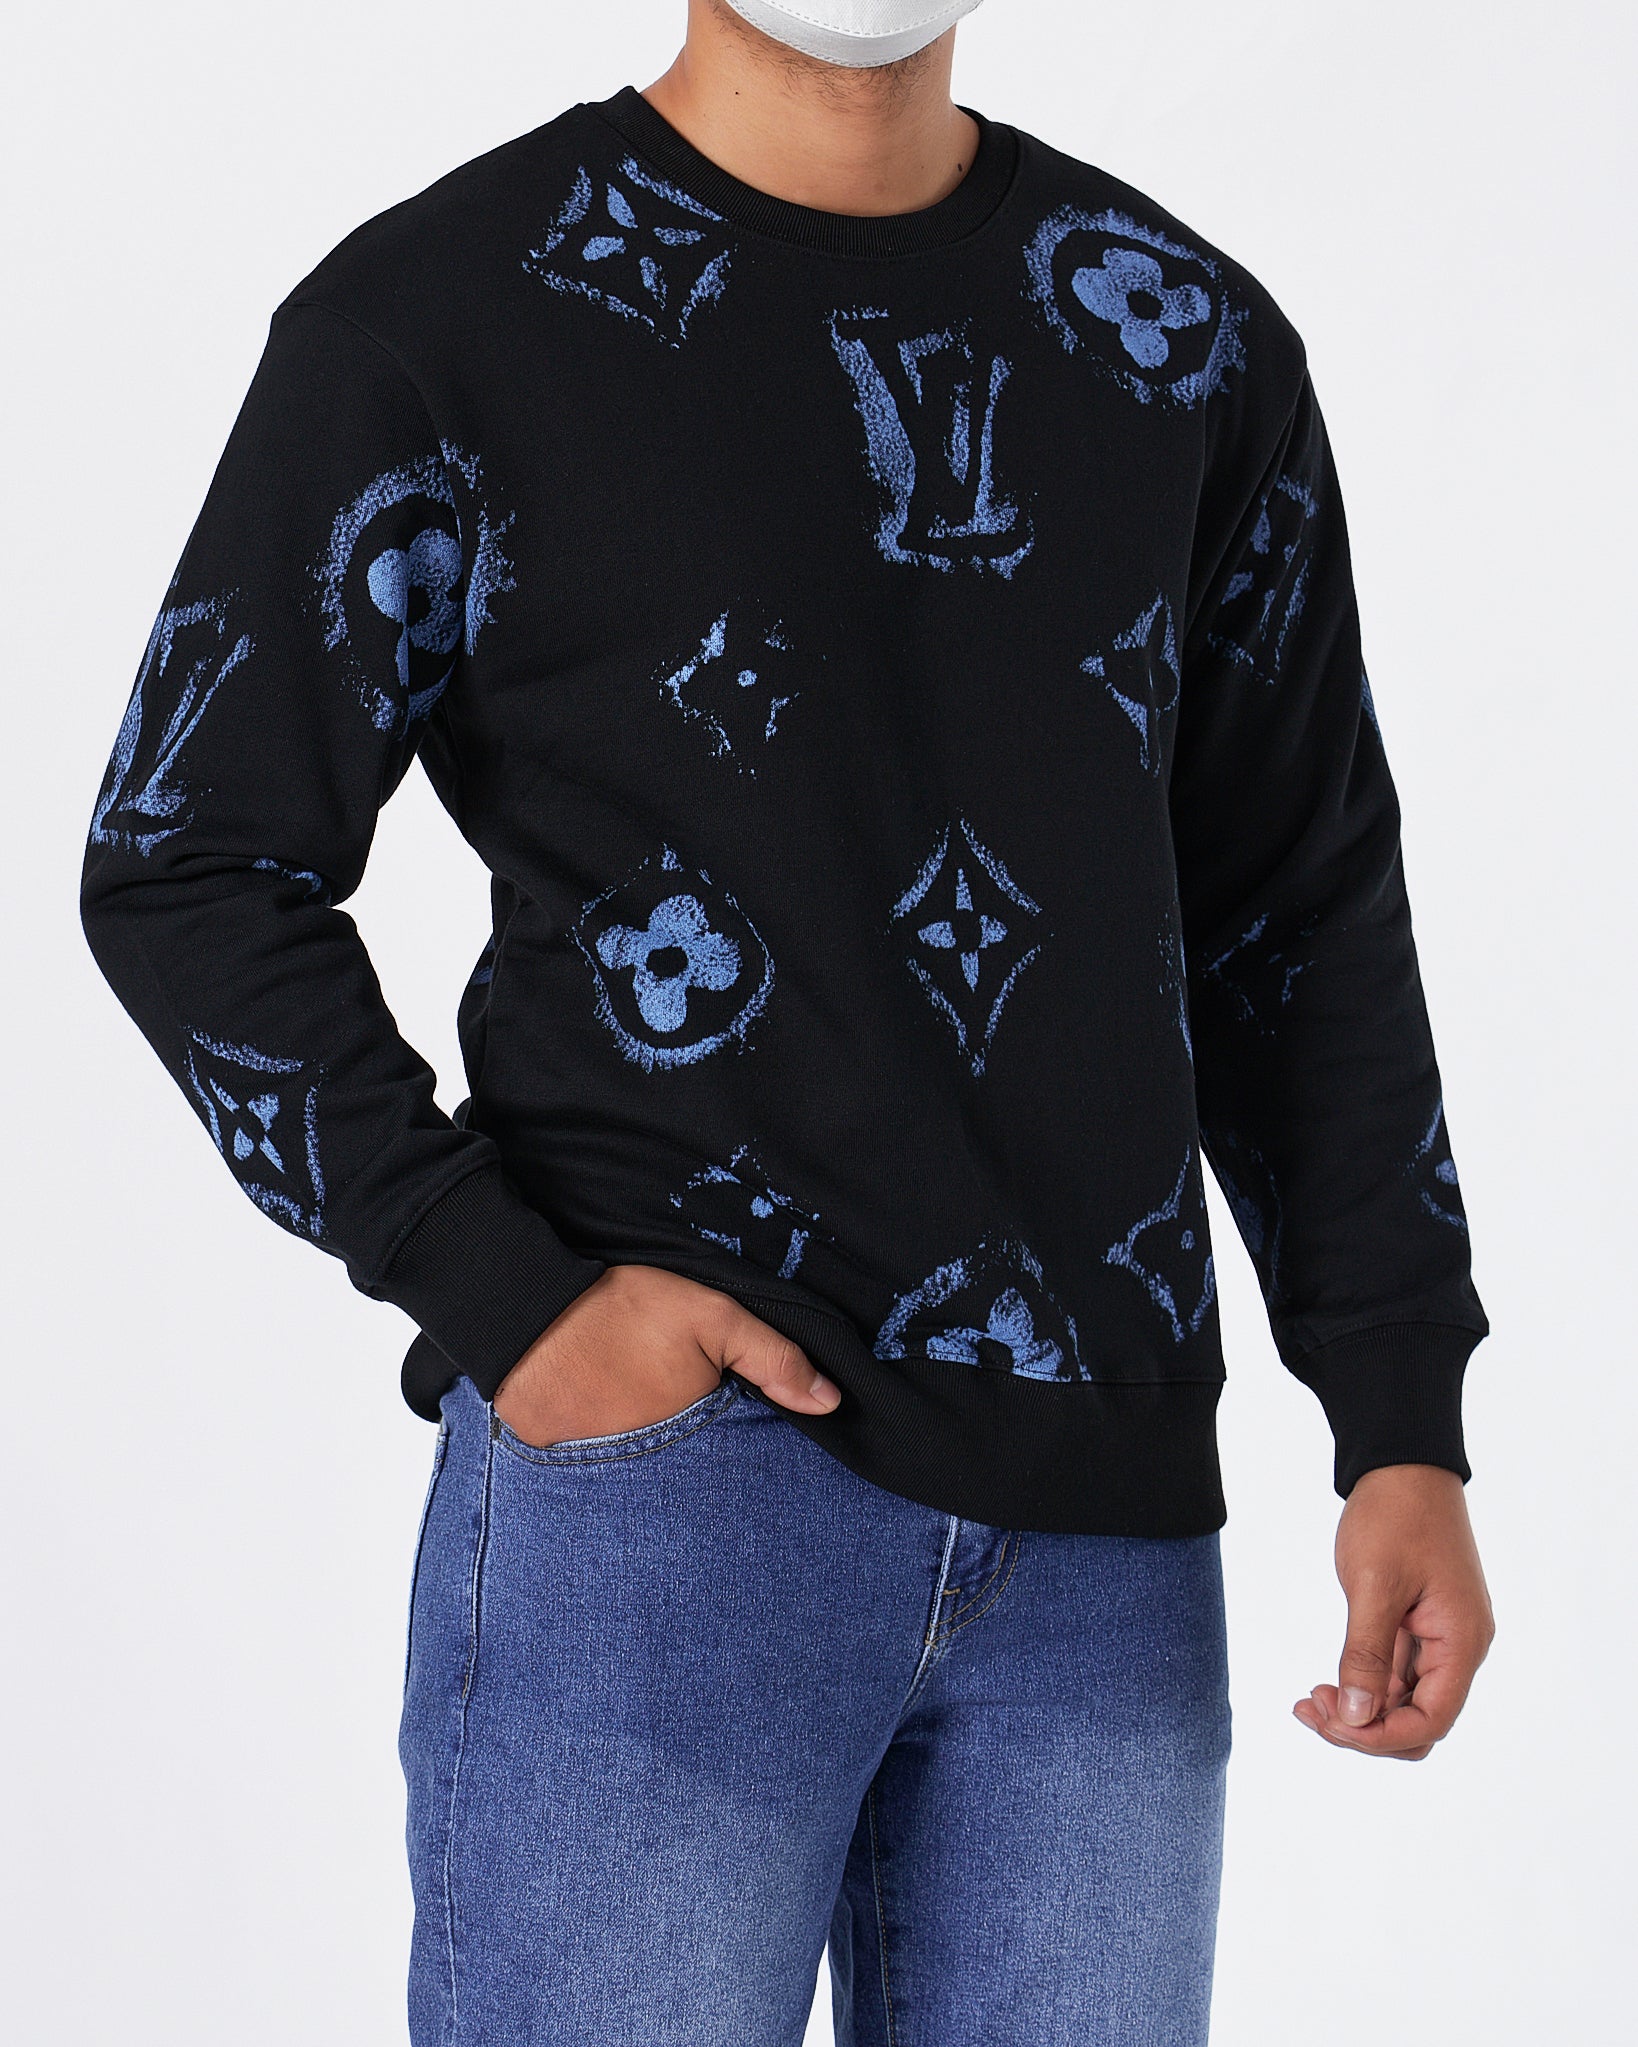 LV Monogram Over Printed Men Black Sweater 32.90